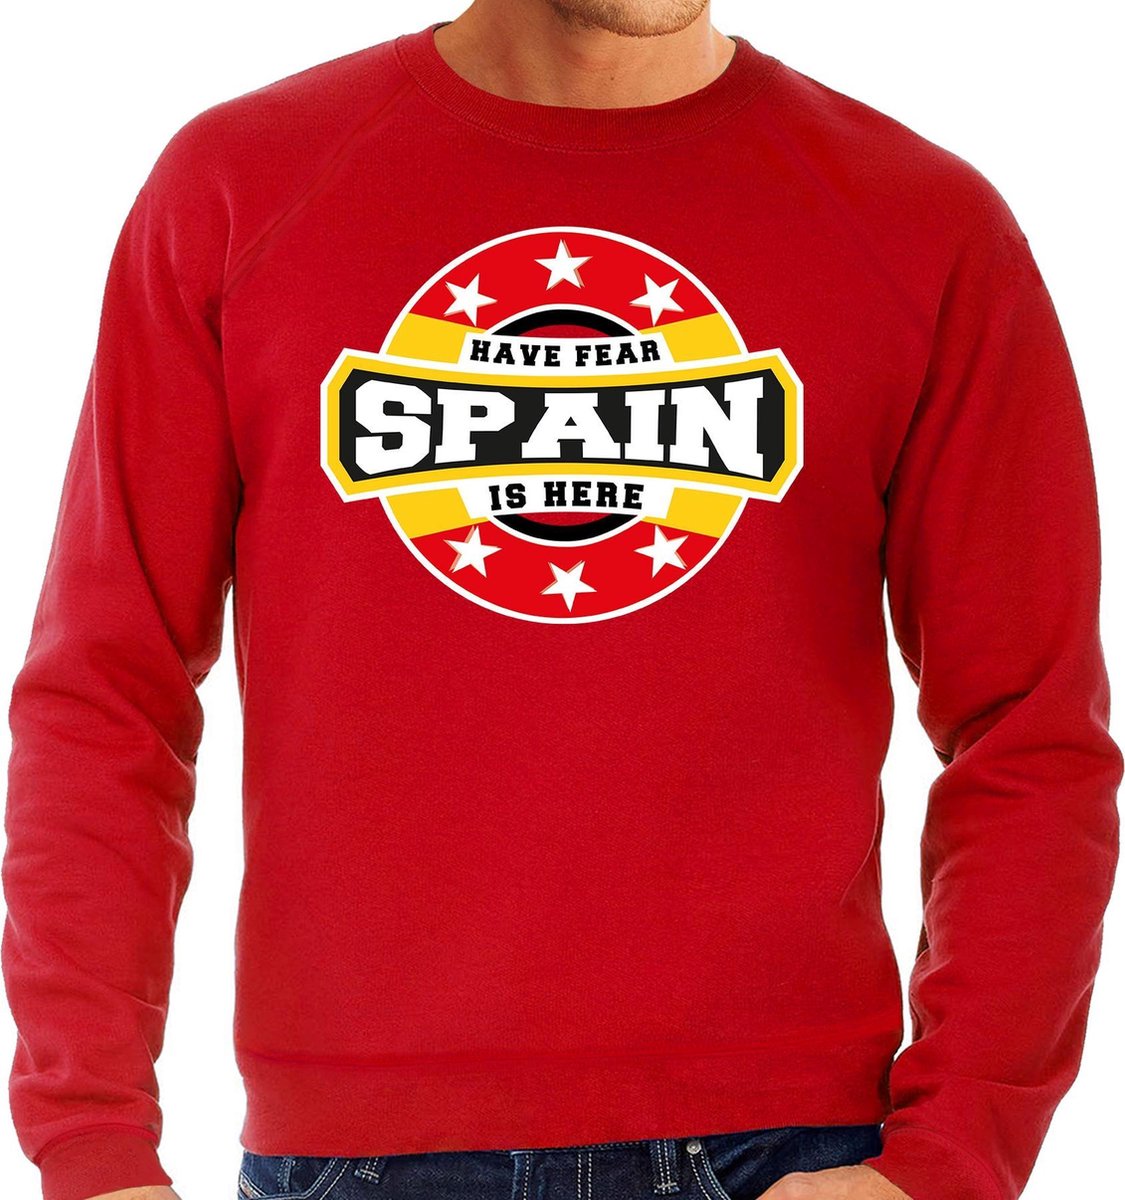 Have fear Spain is here sweater met sterren embleem in de kleuren van de Spaanse vlag - rood - heren - Spanje supporter / Spaans elftal fan trui / EK / WK / kleding L